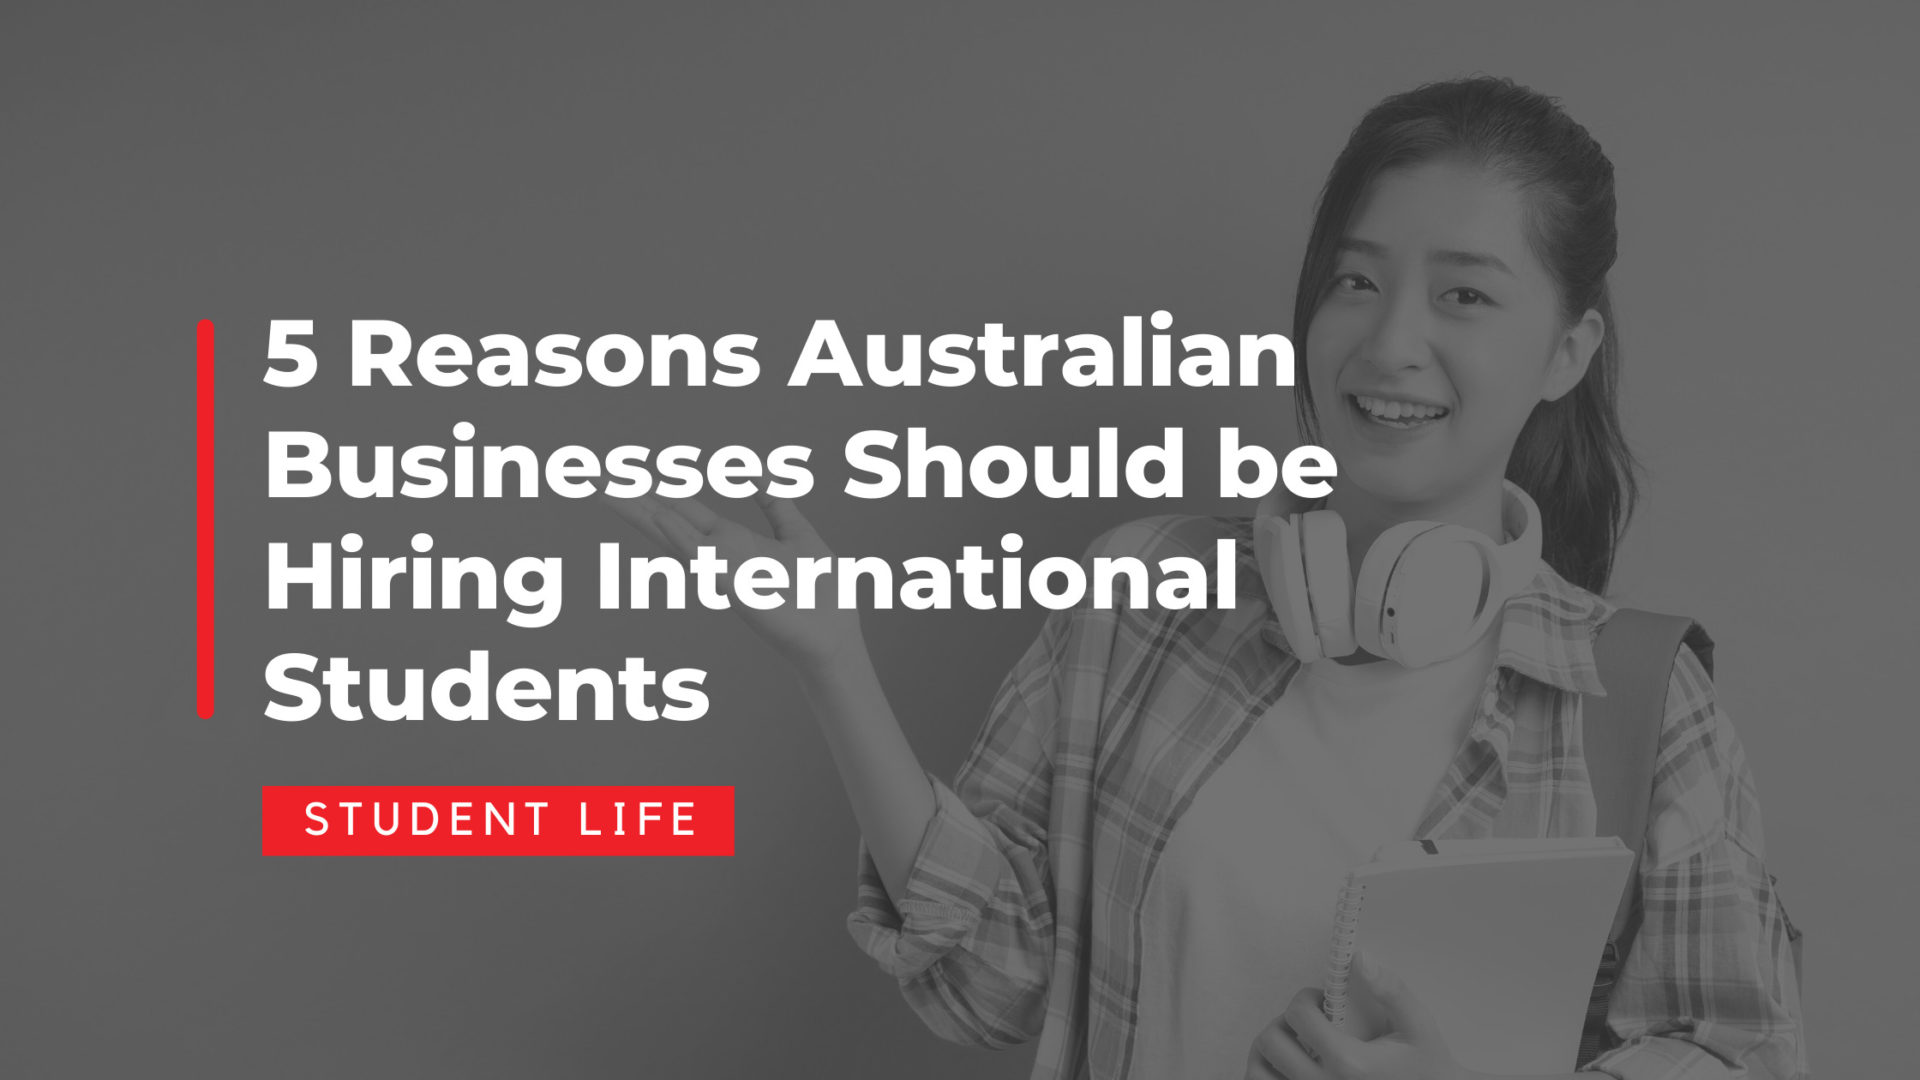 5 Reasons Australian Businesses Should be Hiring International Students